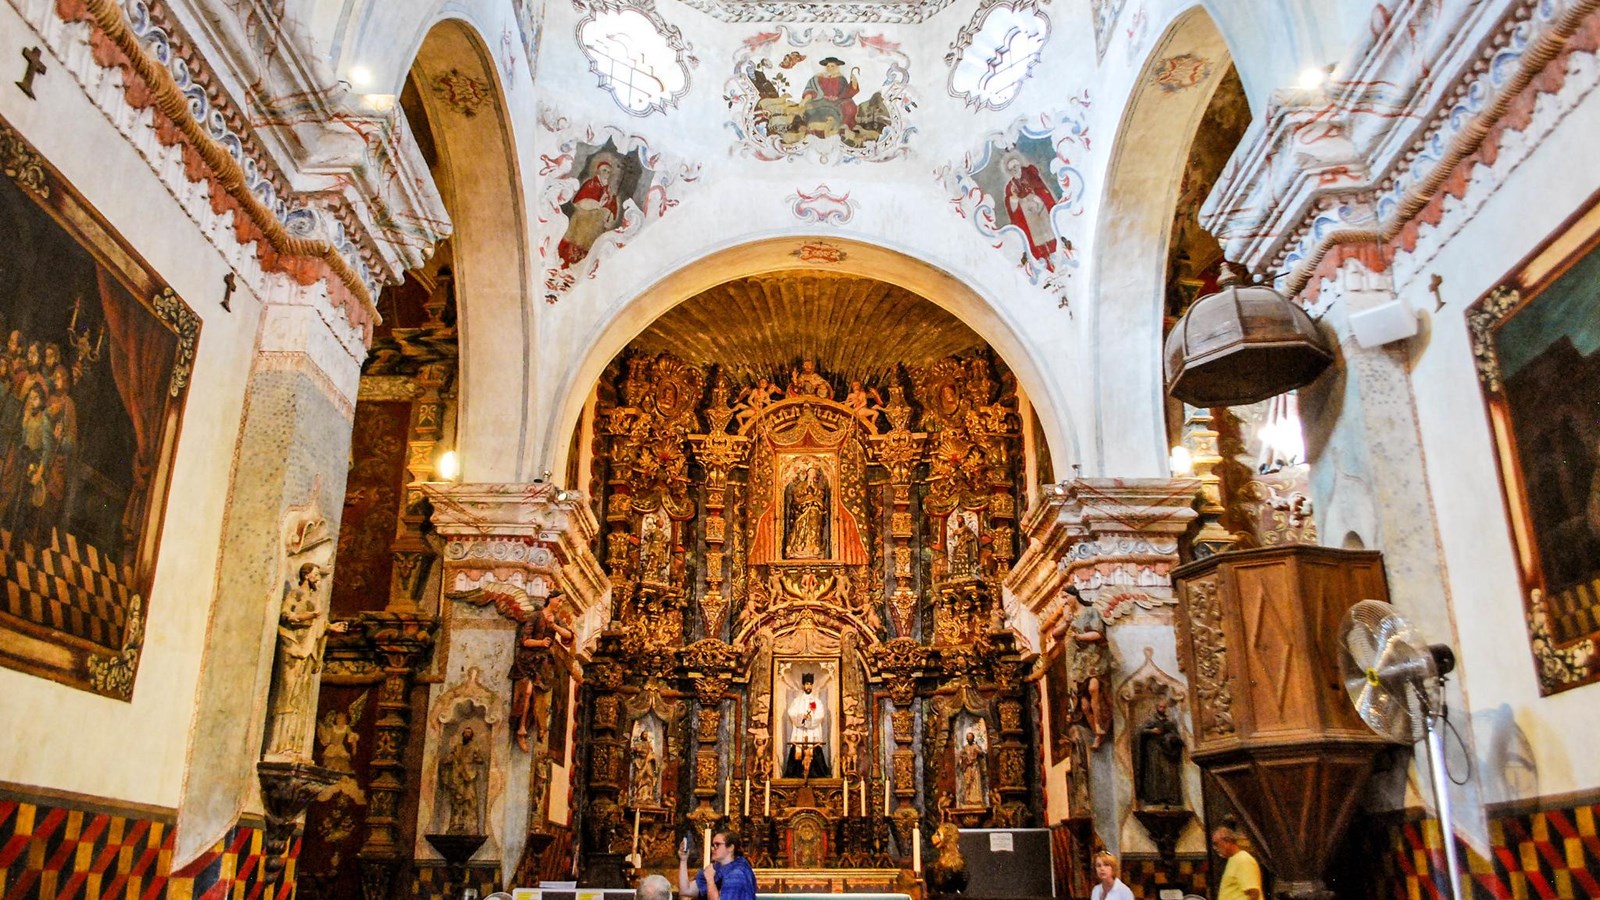 The elaborate, multi-colored, baroque alter inside a mission church